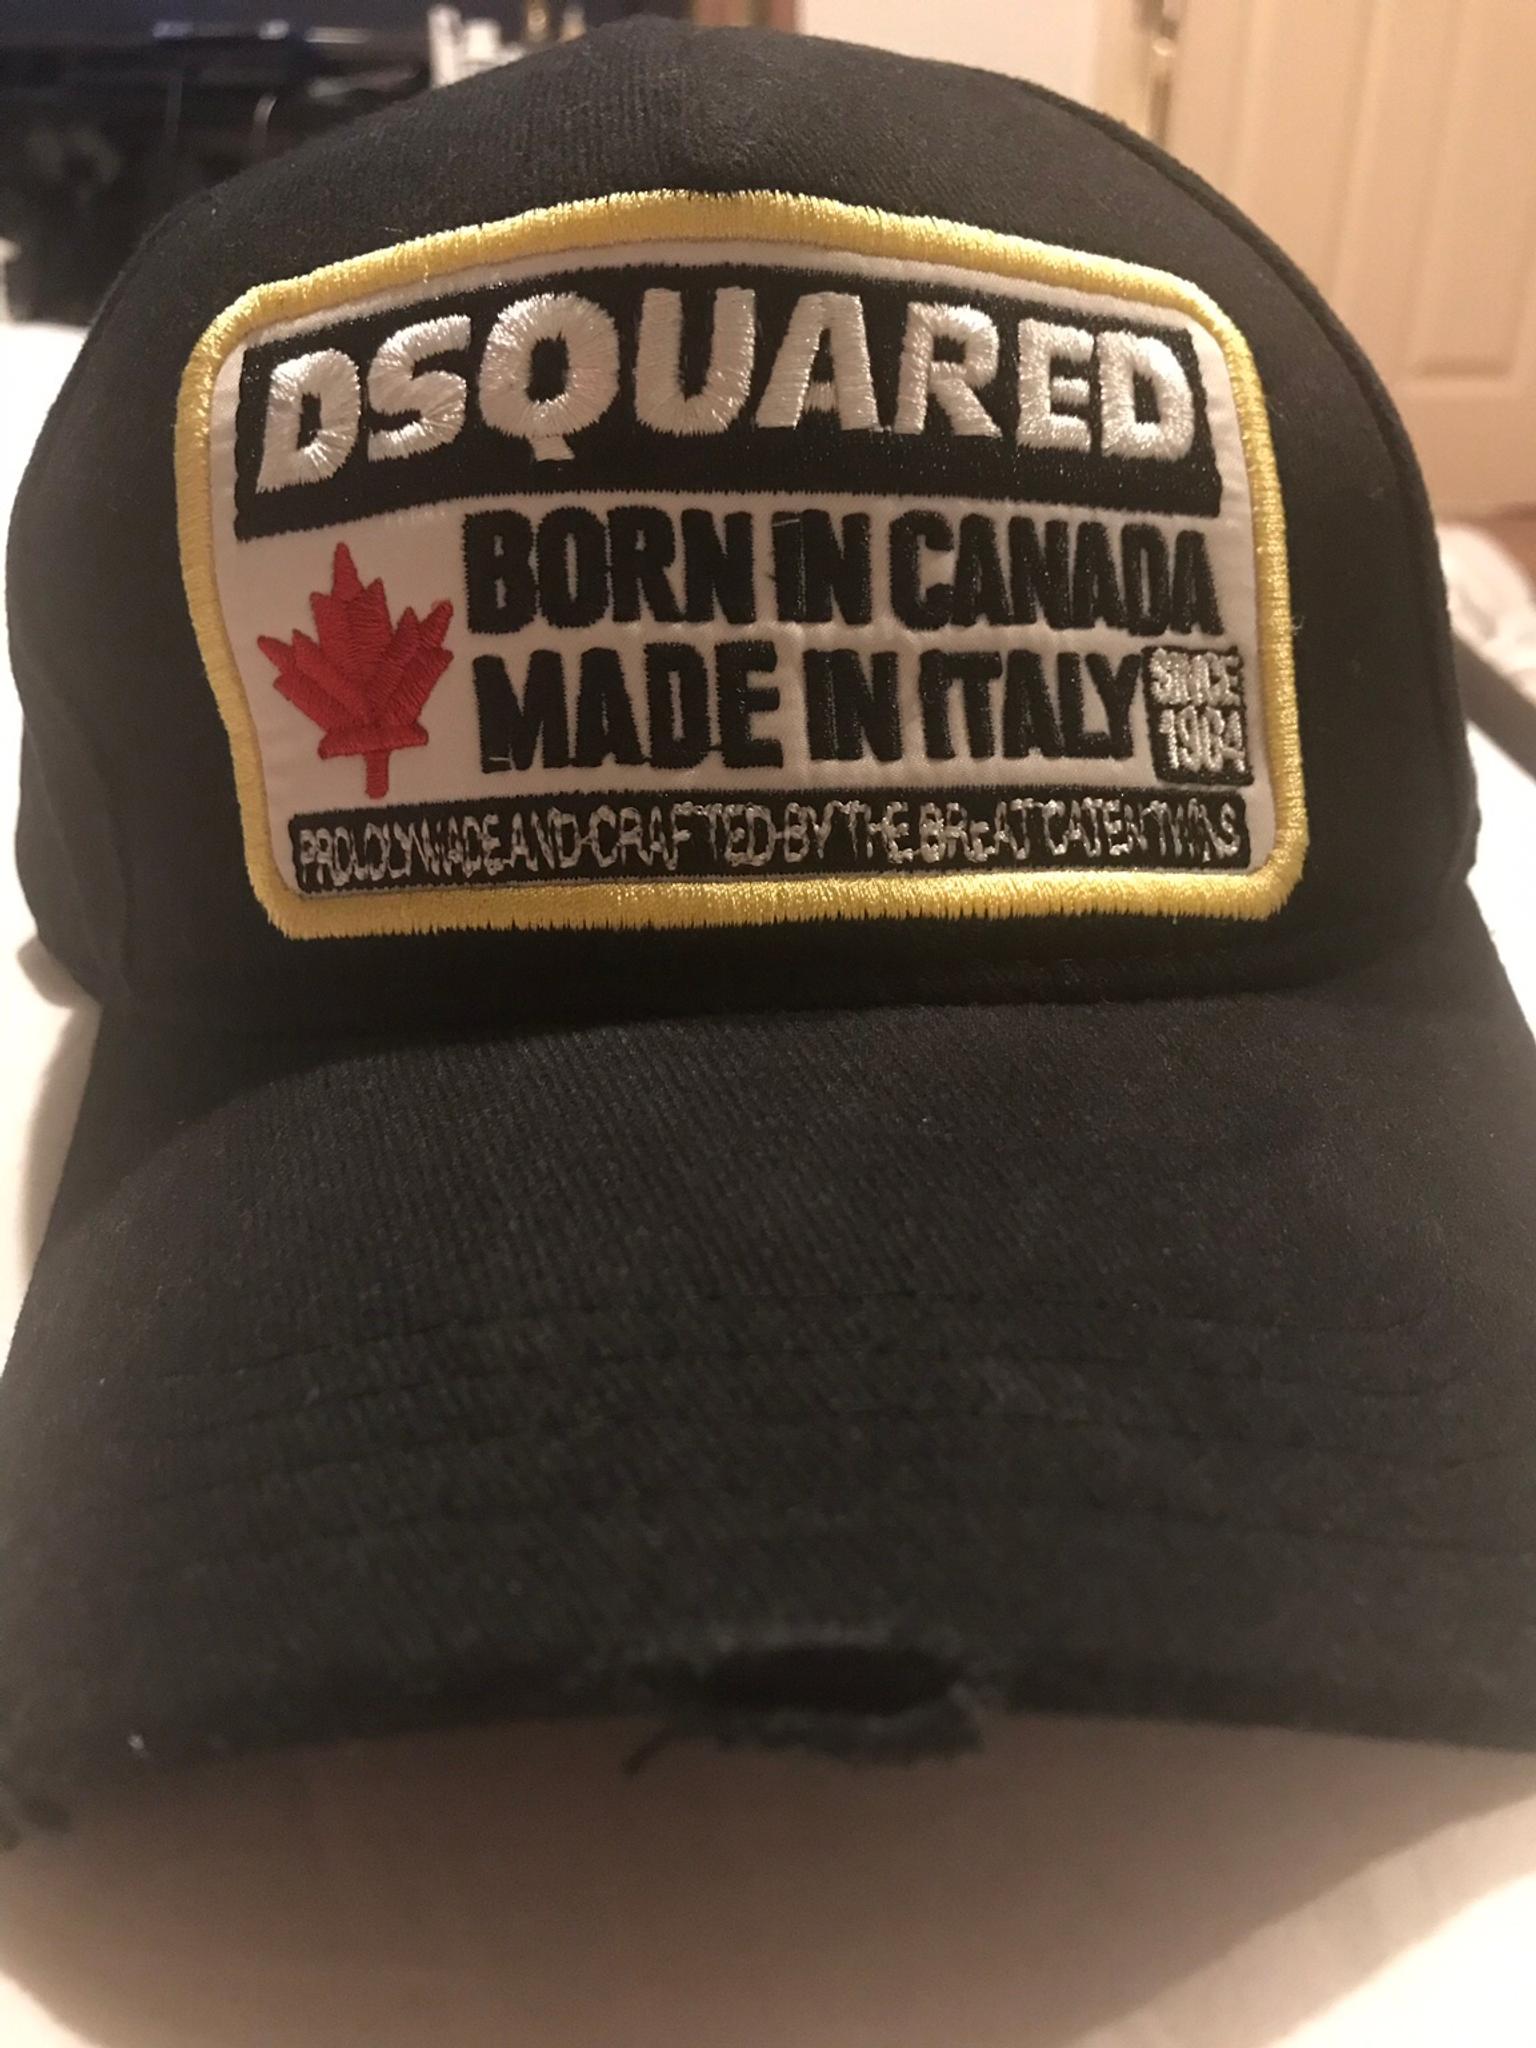 dsquared cap born in canada made in italy